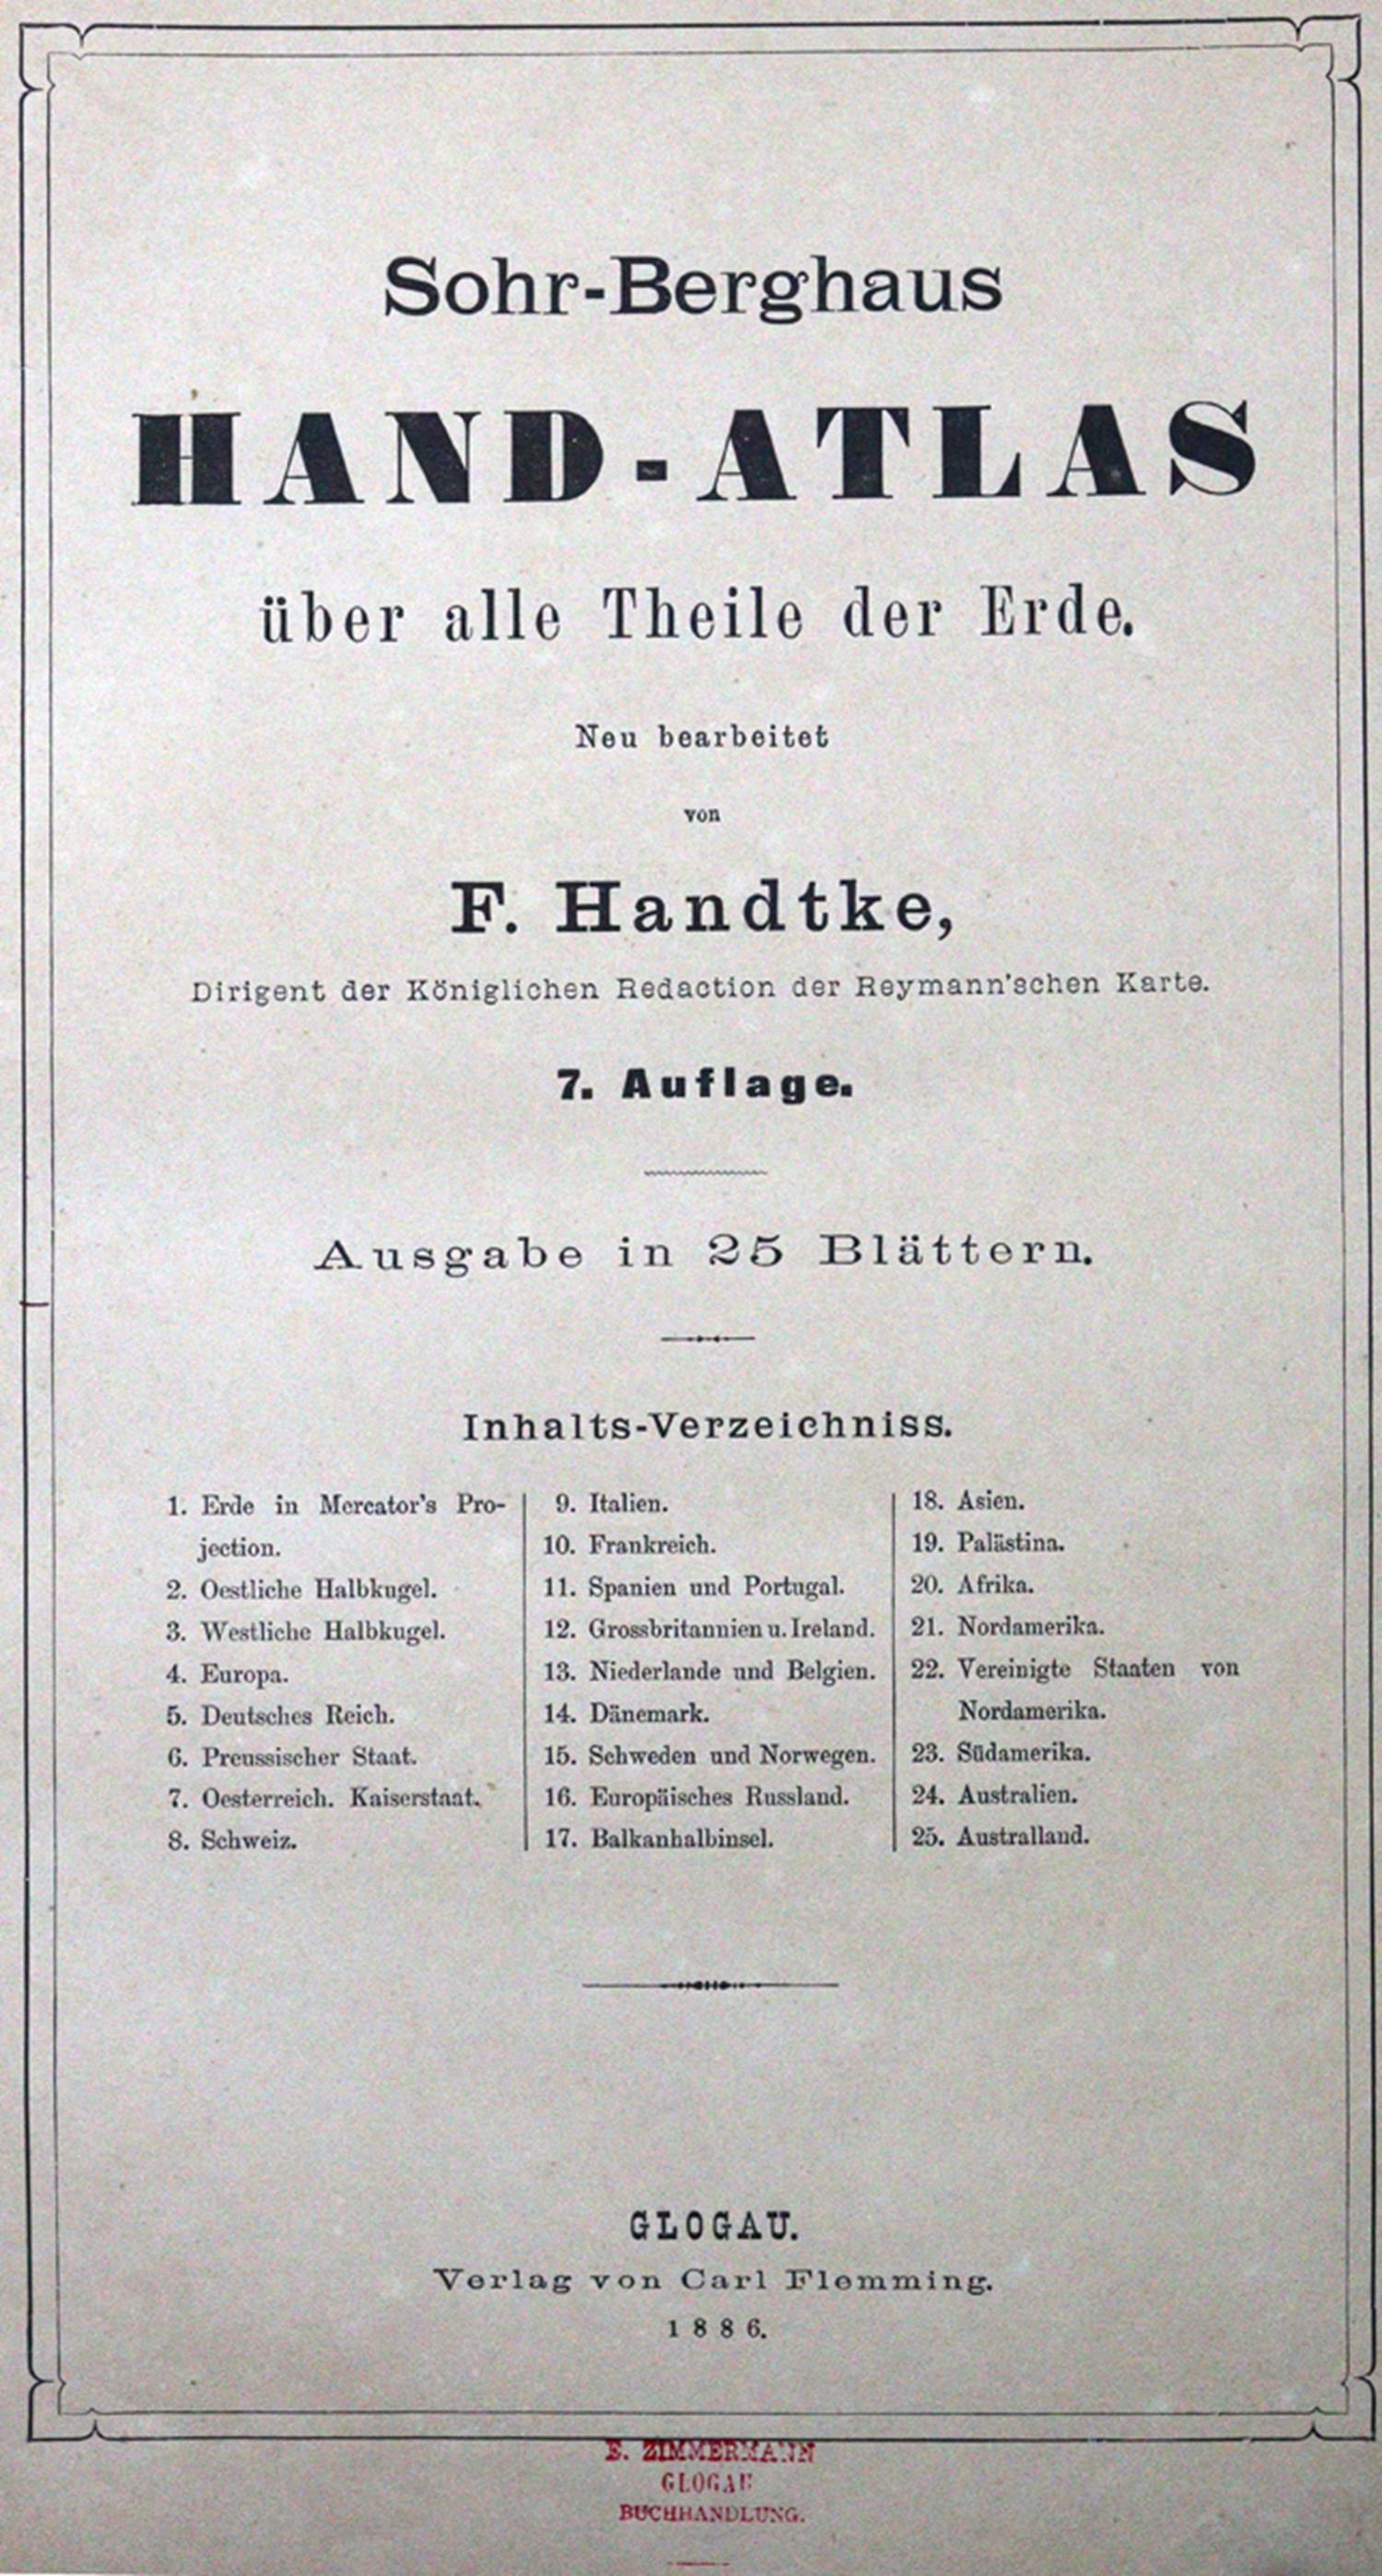 Handtke,F. | Bild Nr.1